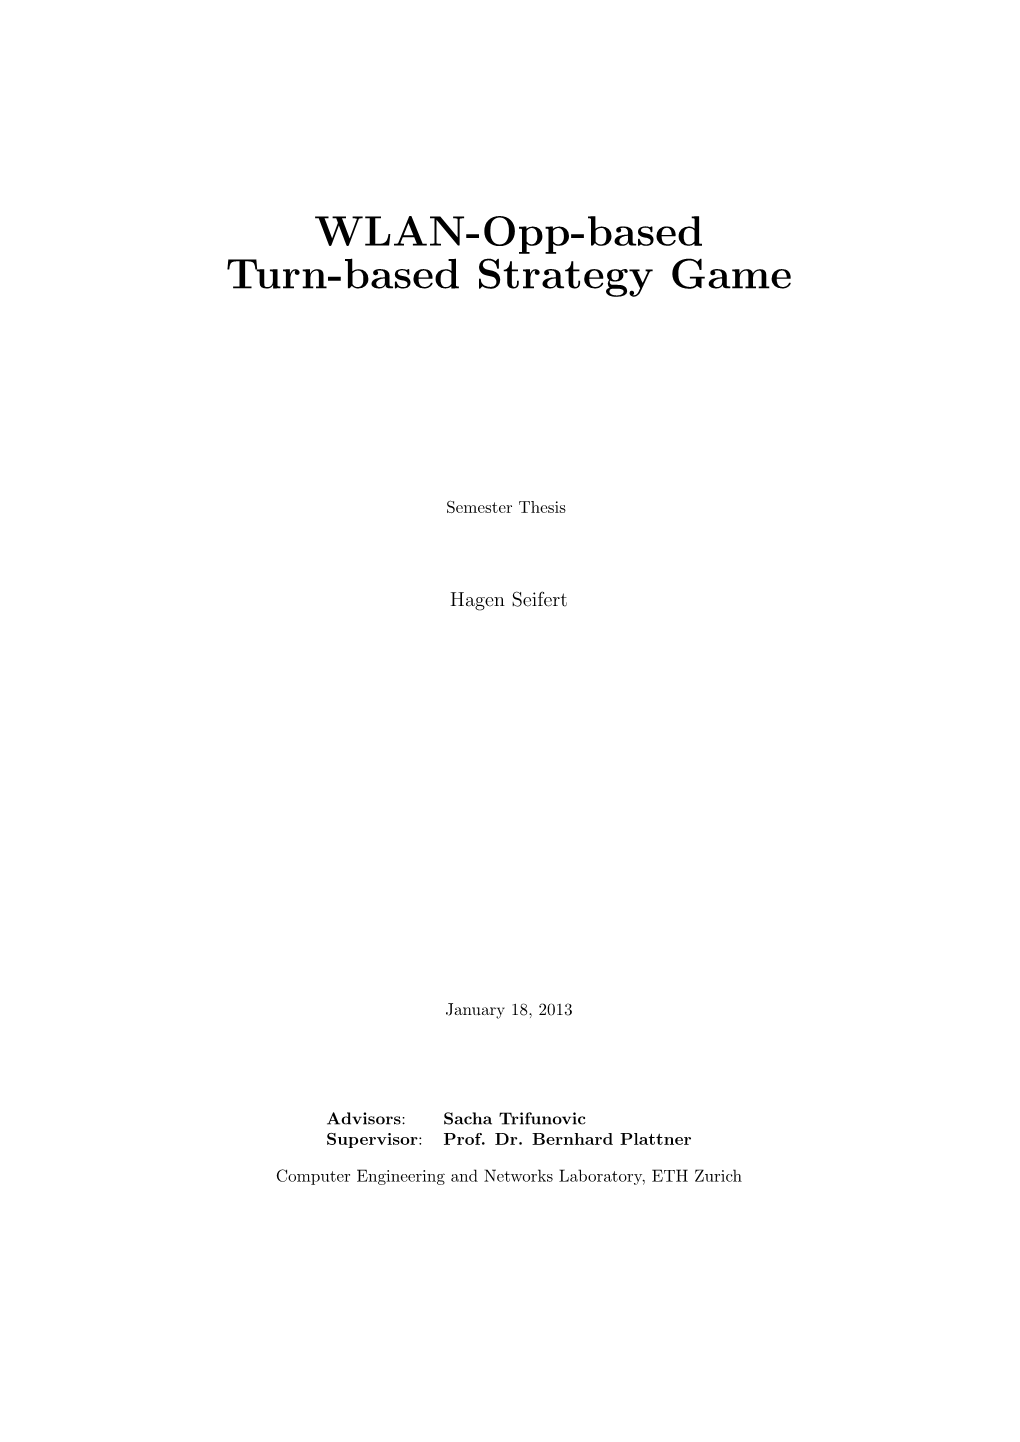 WLAN-Opp-Based Turn-Based Strategy Game